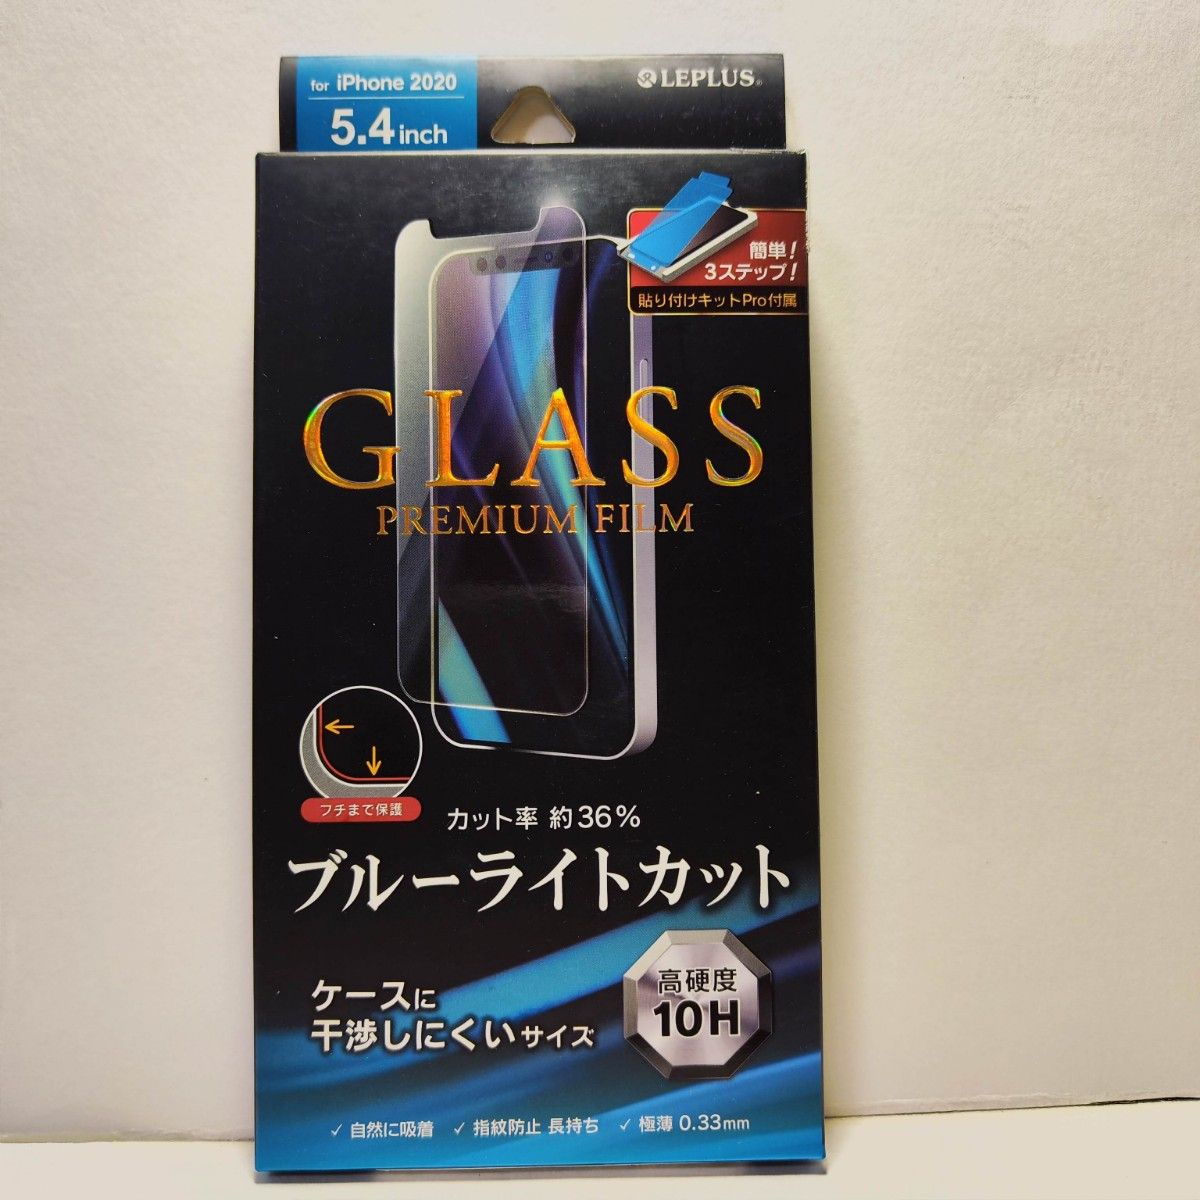 iPhone12mini 硬度　10H ガラス フィルム ブルーライトカット iPhone 12 mini 12mini 